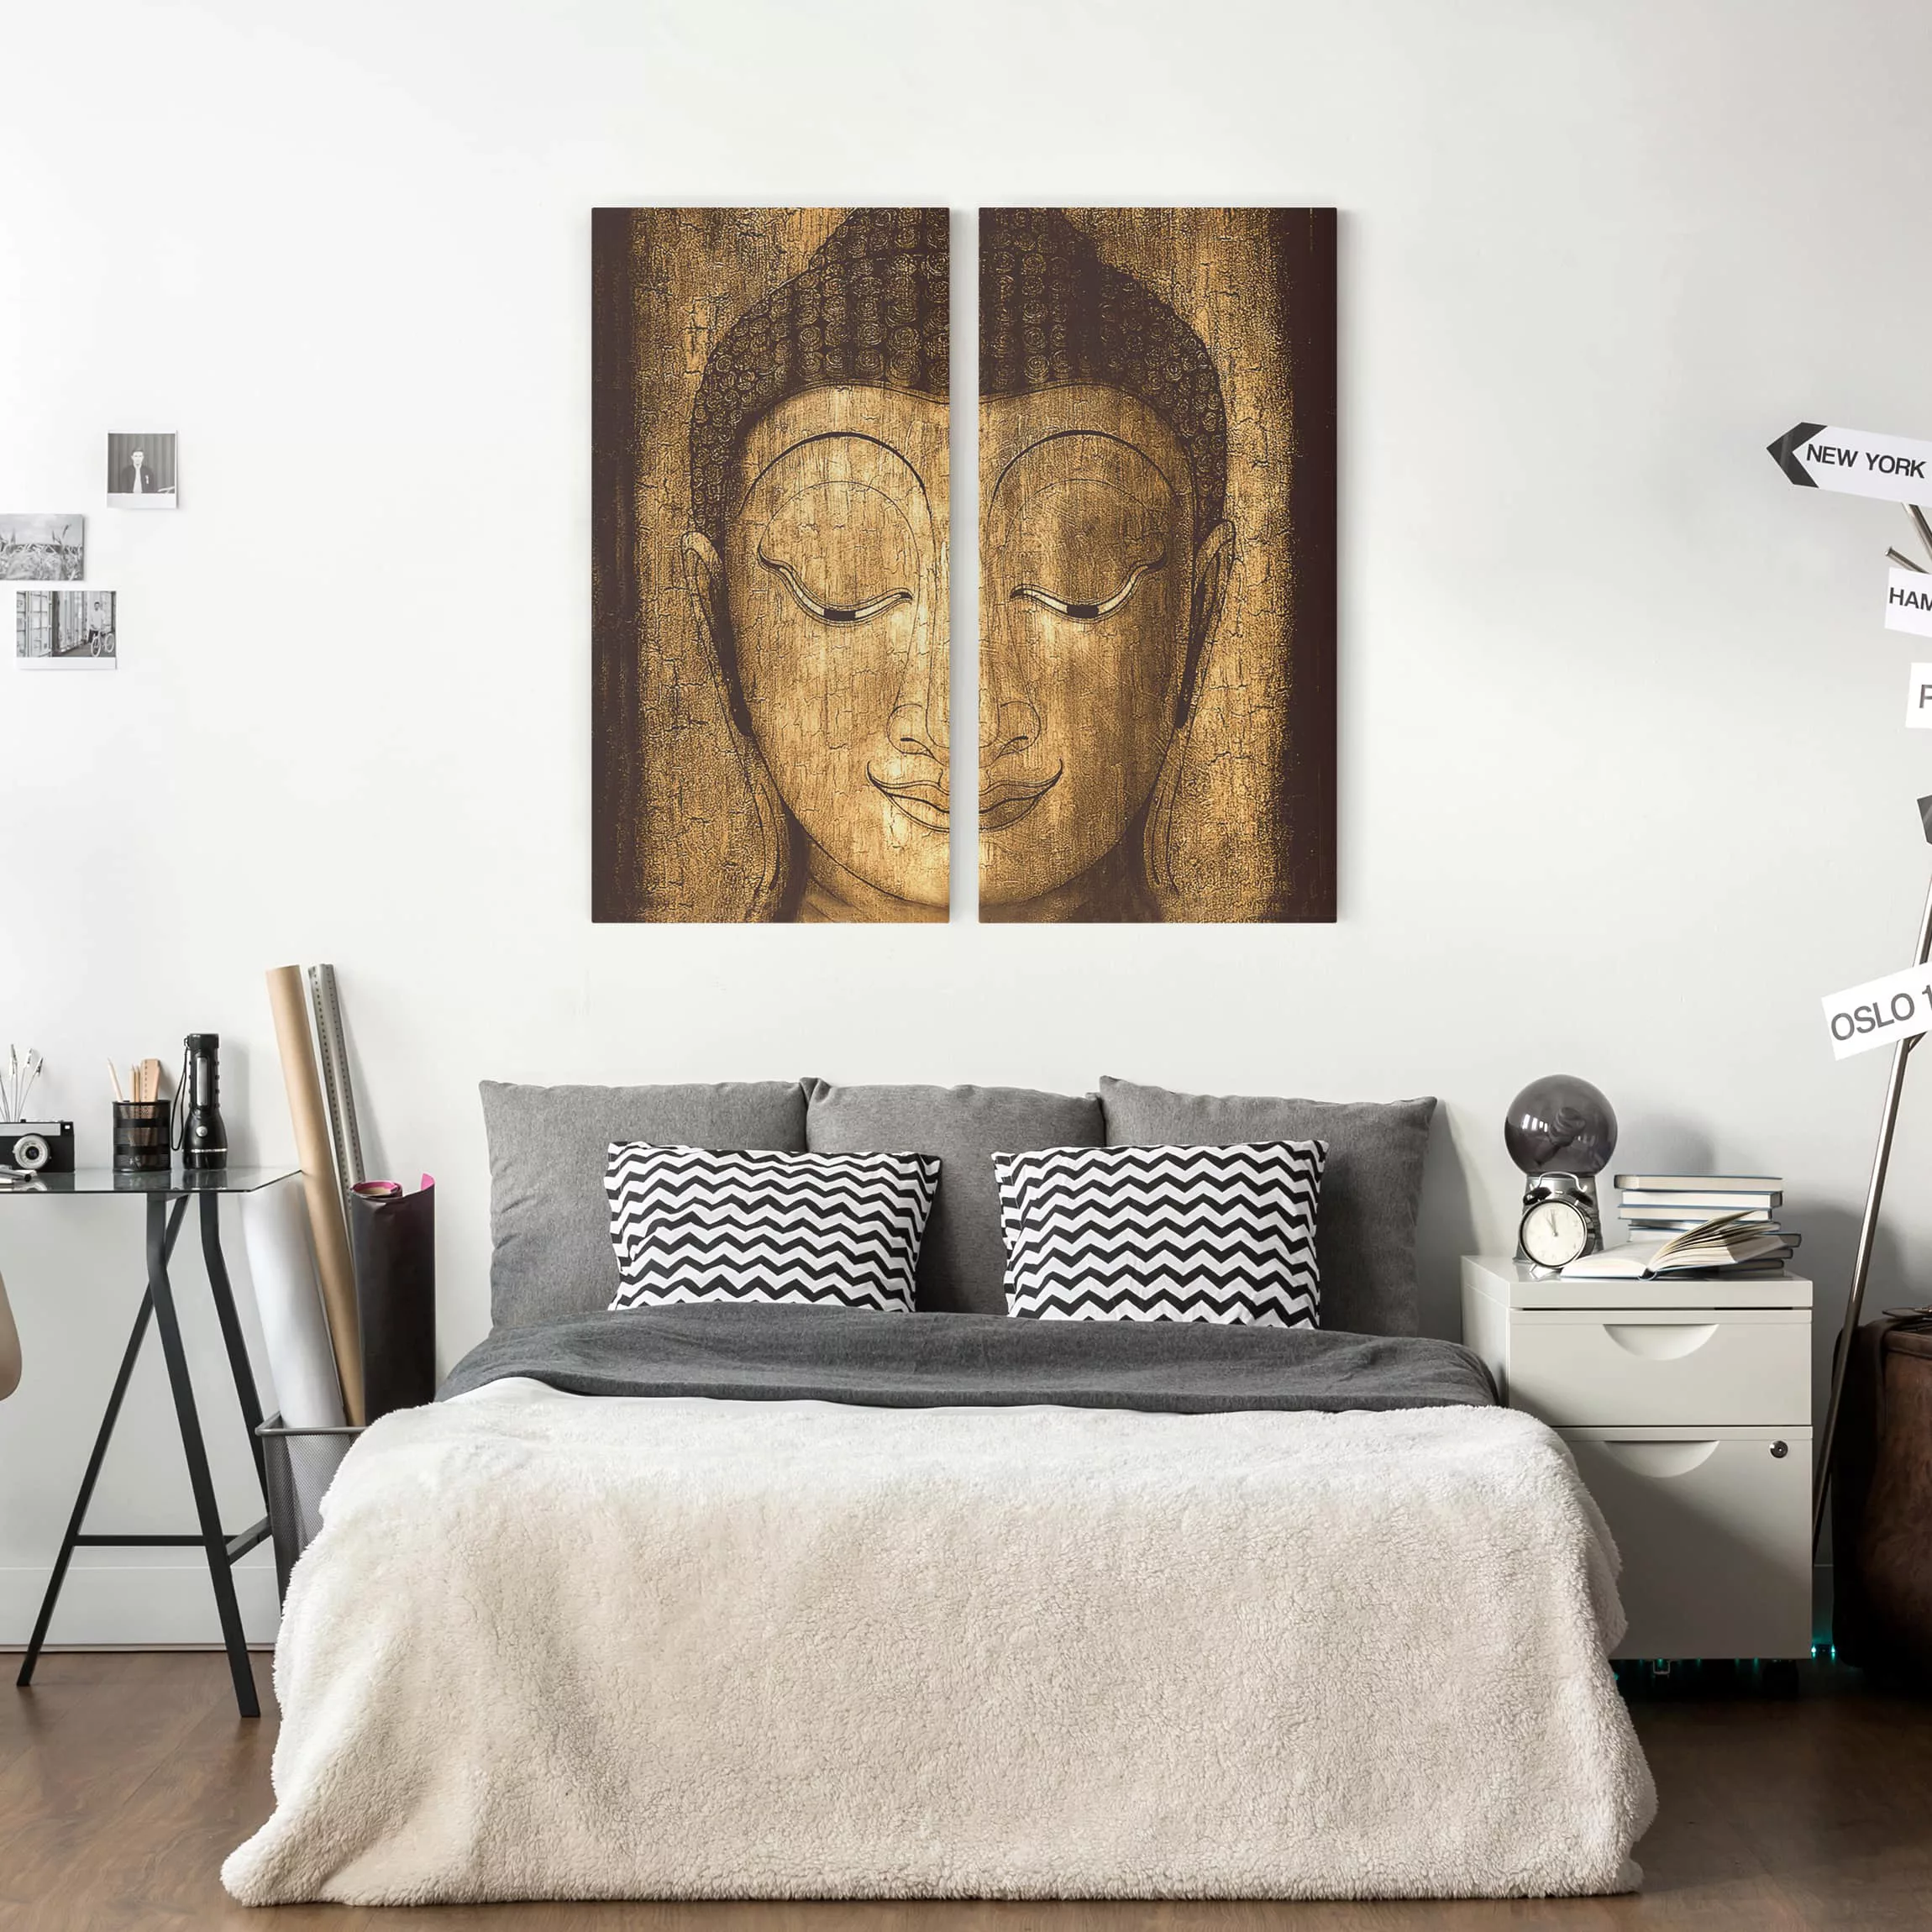 2-teiliges Leinwandbild Buddha - Quadrat Smiling Buddha günstig online kaufen